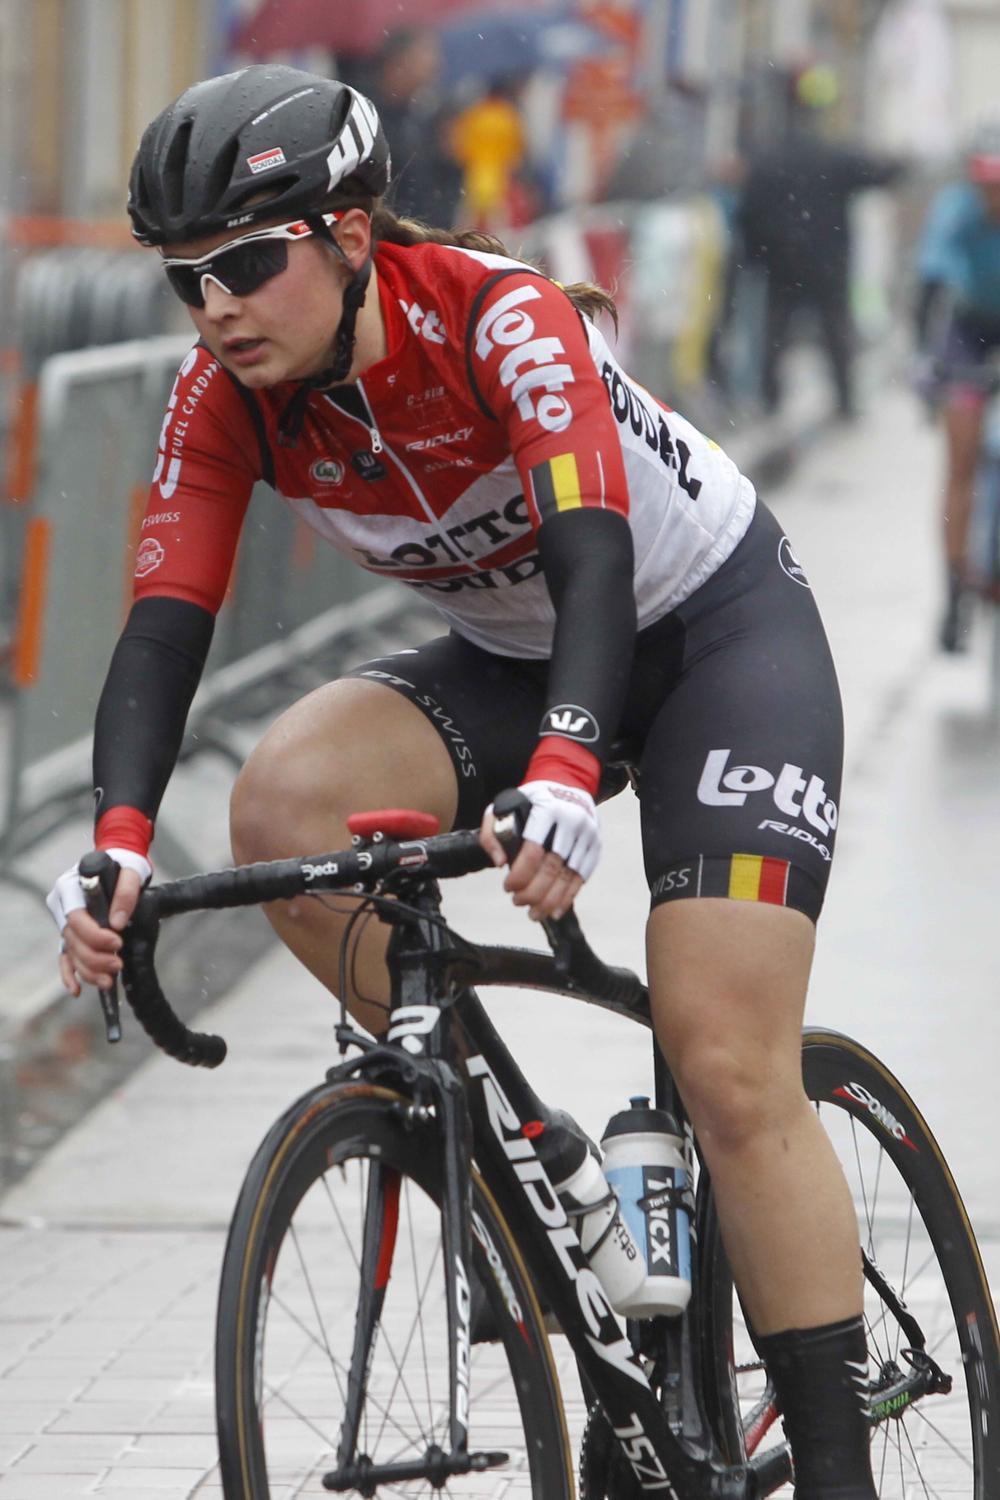 Alana Castrique rijdt bij het damesteam van Lotto-Soudal. (Foto Coghe)